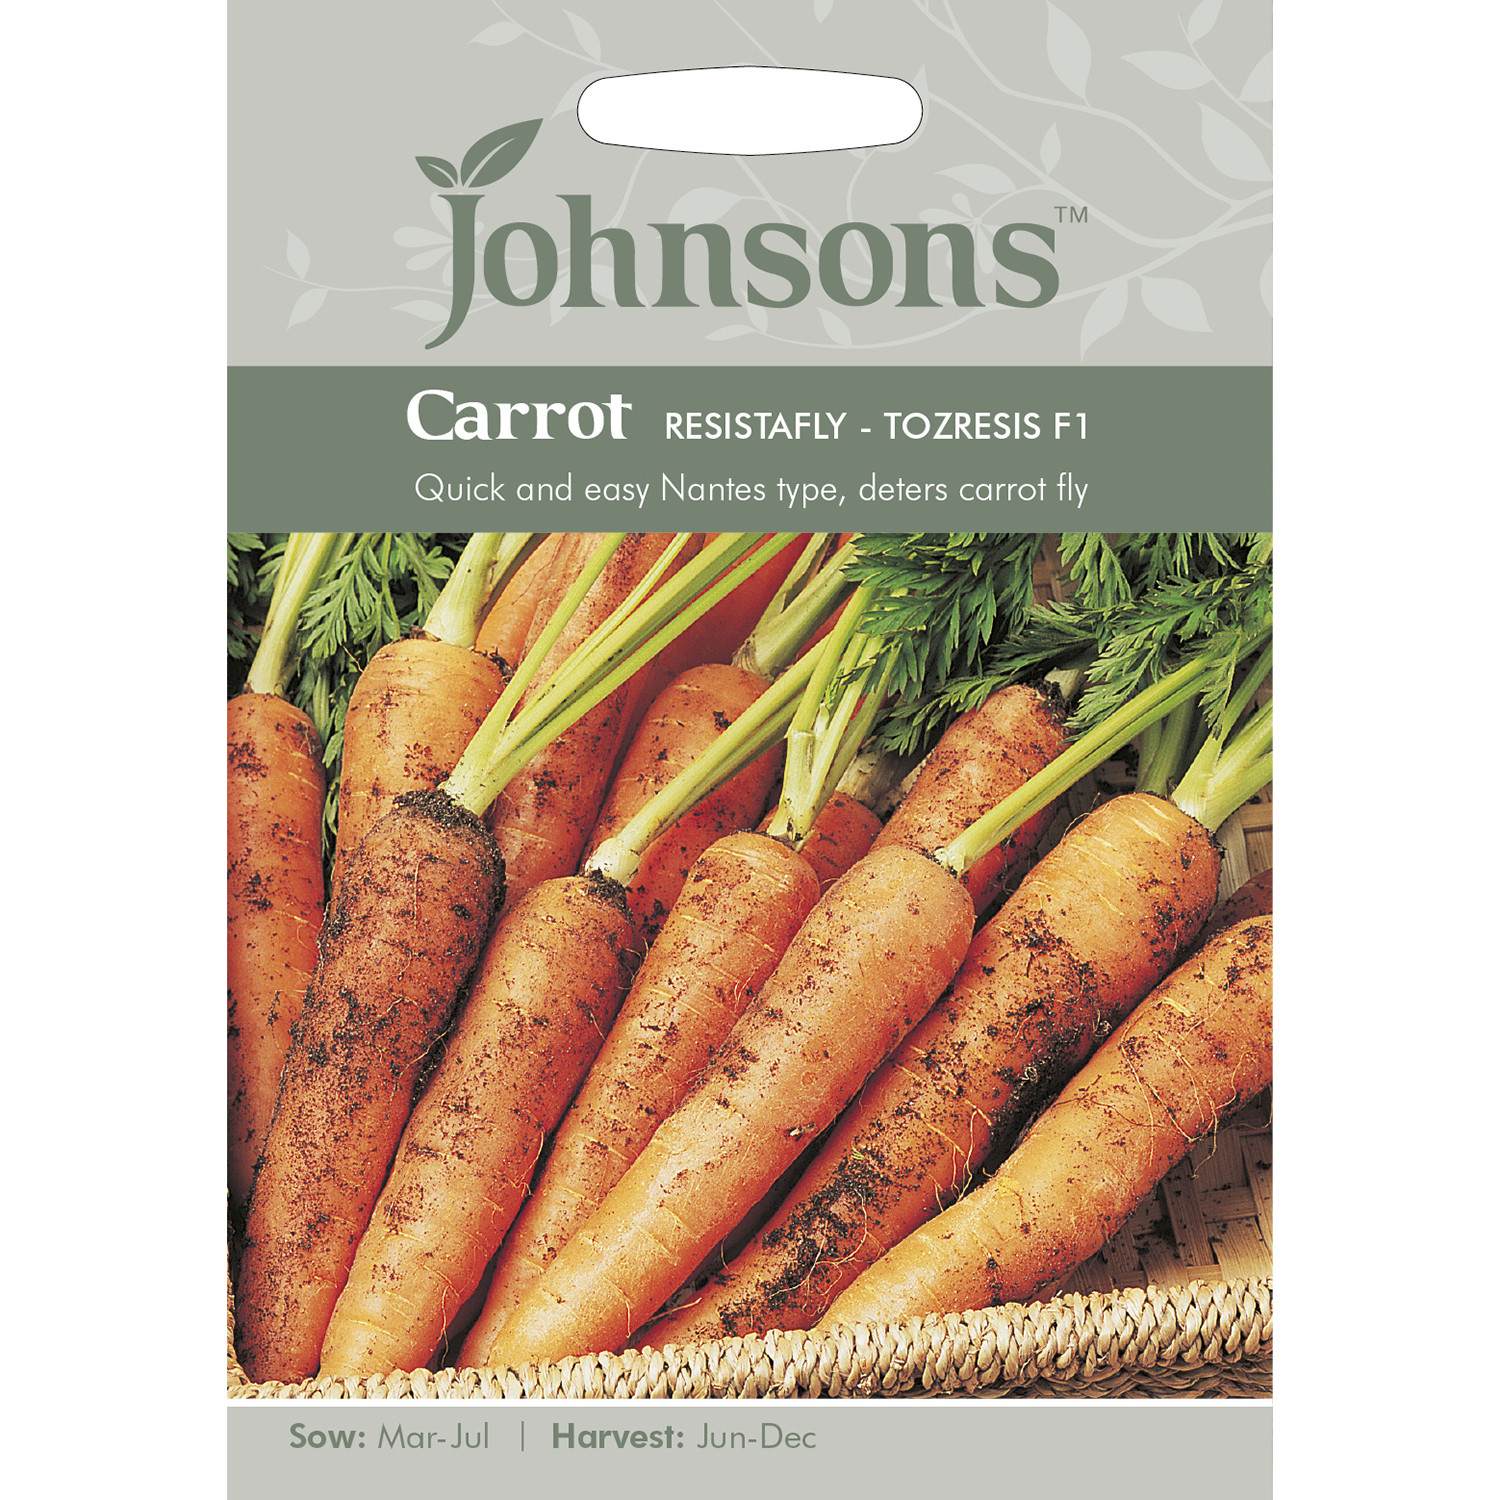 Johnsons Resistafly Tozresis F1 Carrot Seeds Image 2